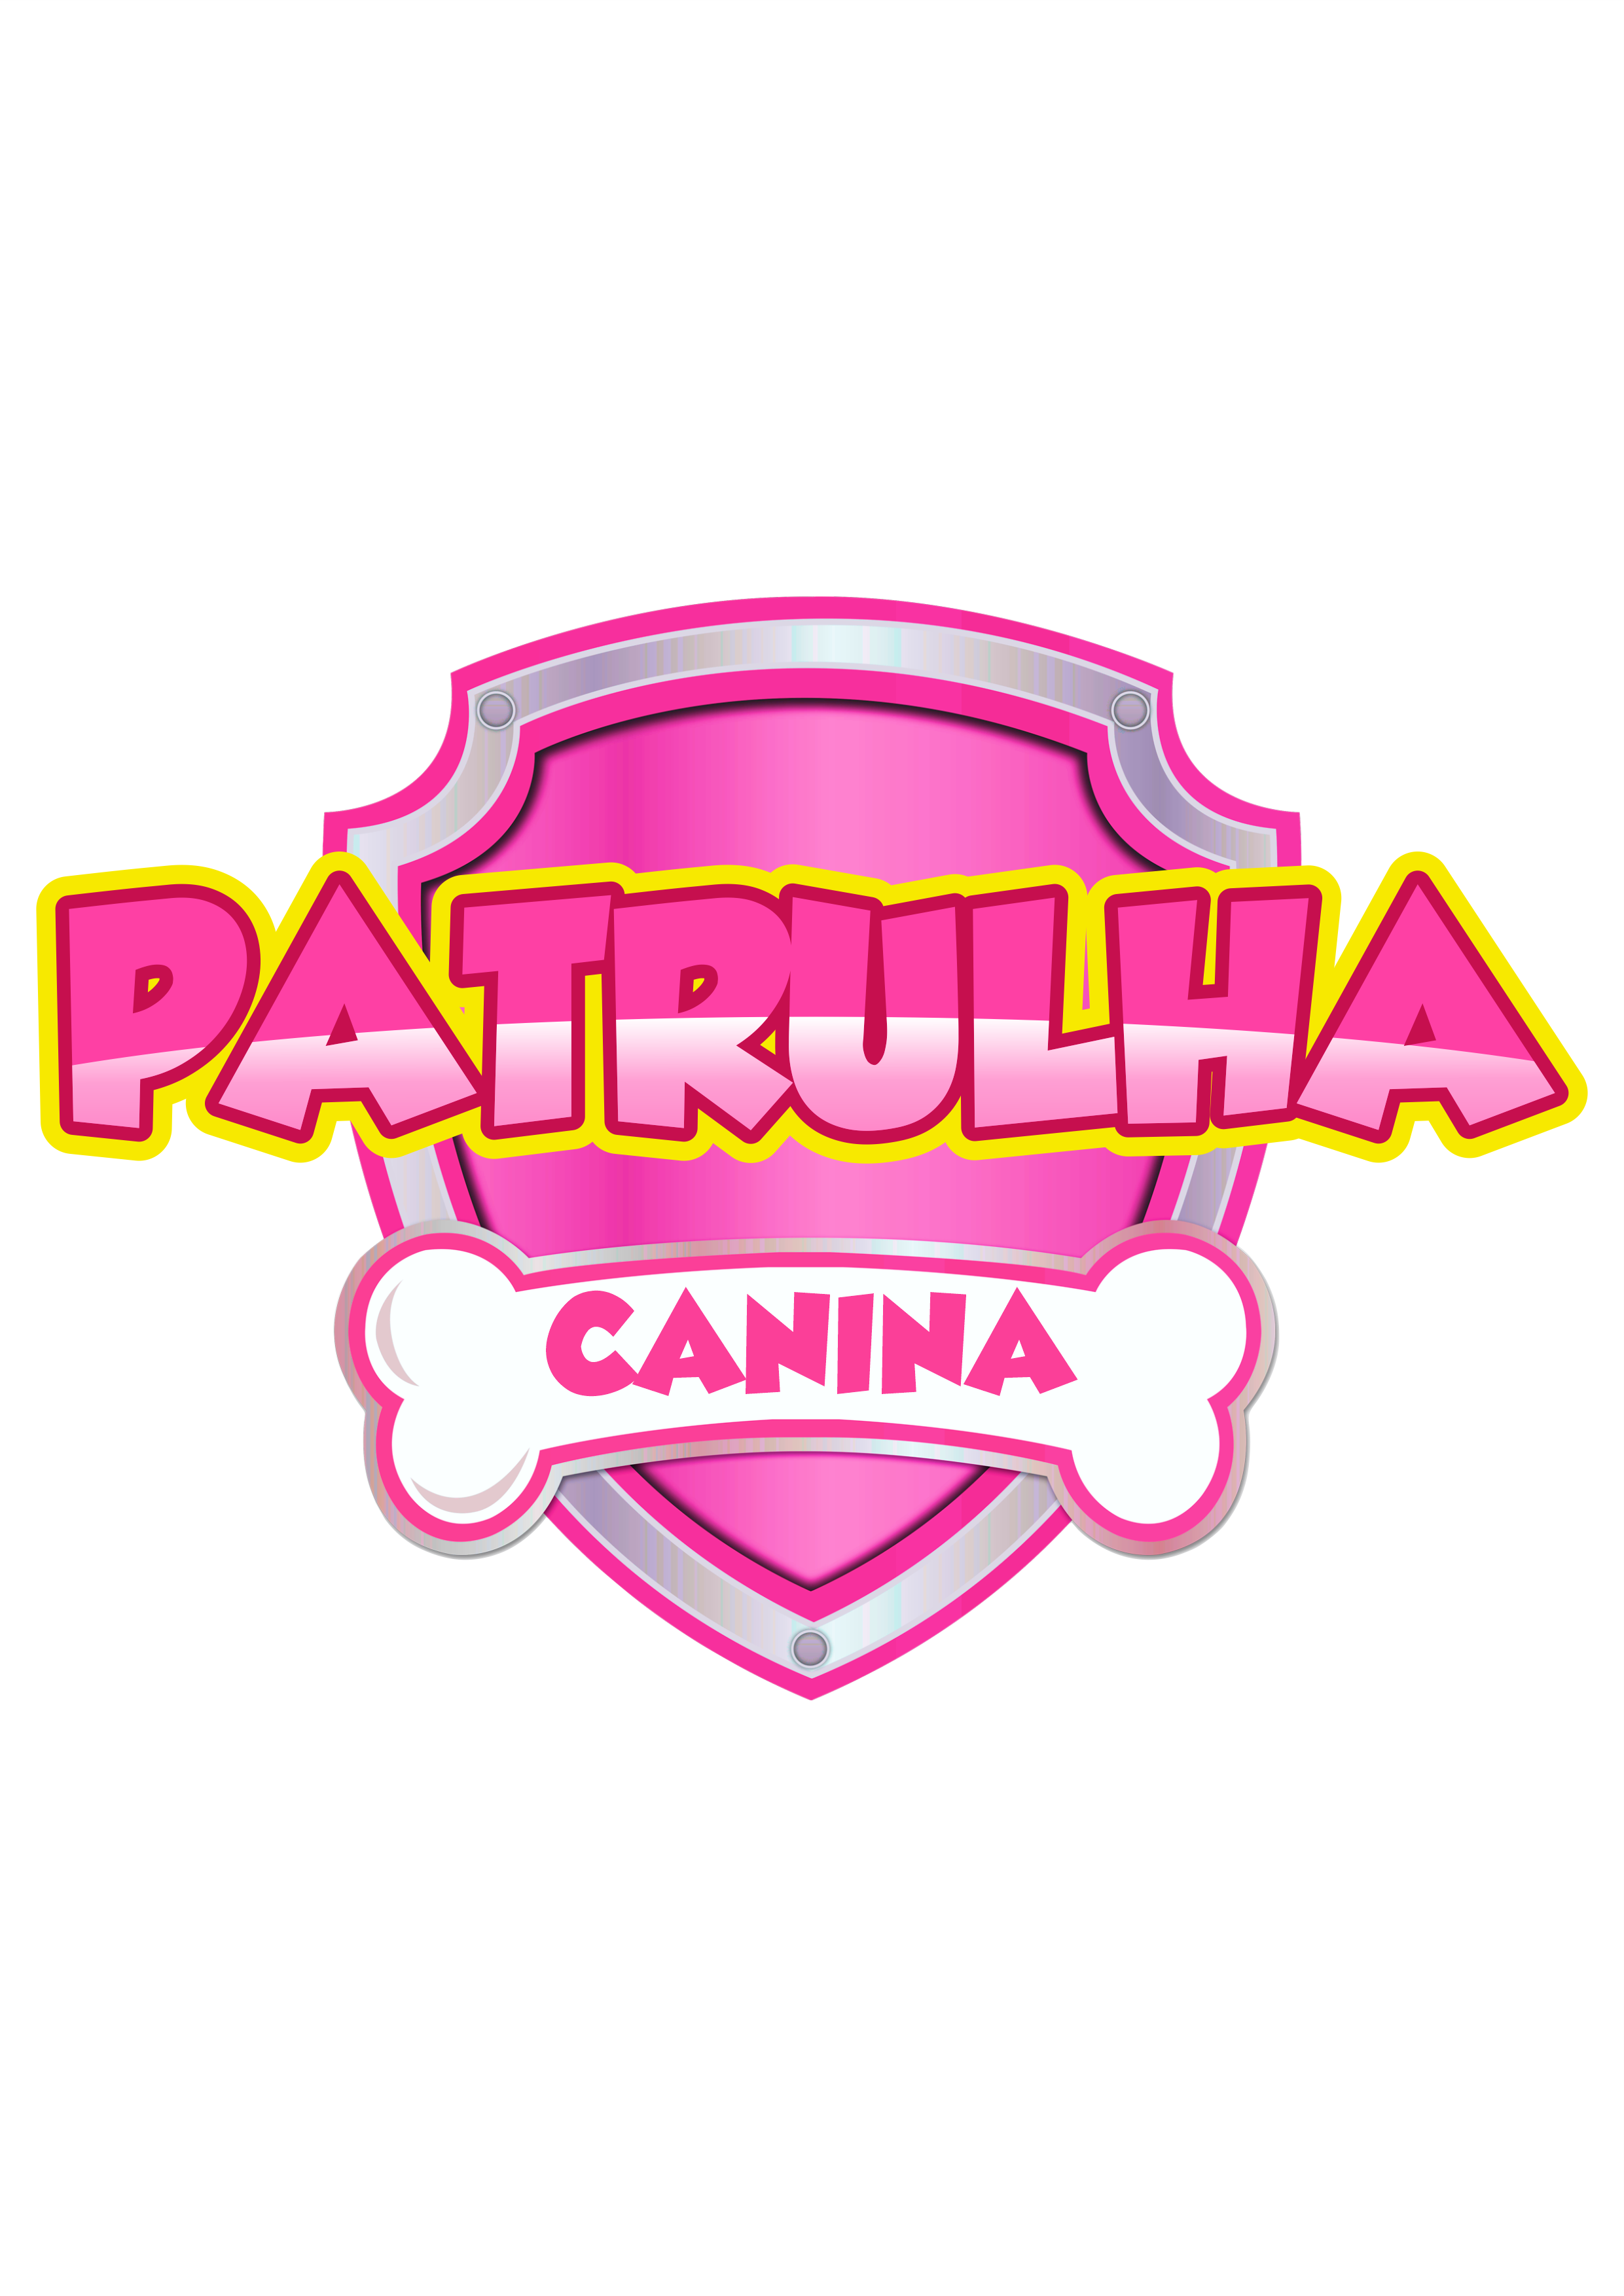 Patrulha canina rosa pink paw patrol desenho animado logomarca logo papelaria png